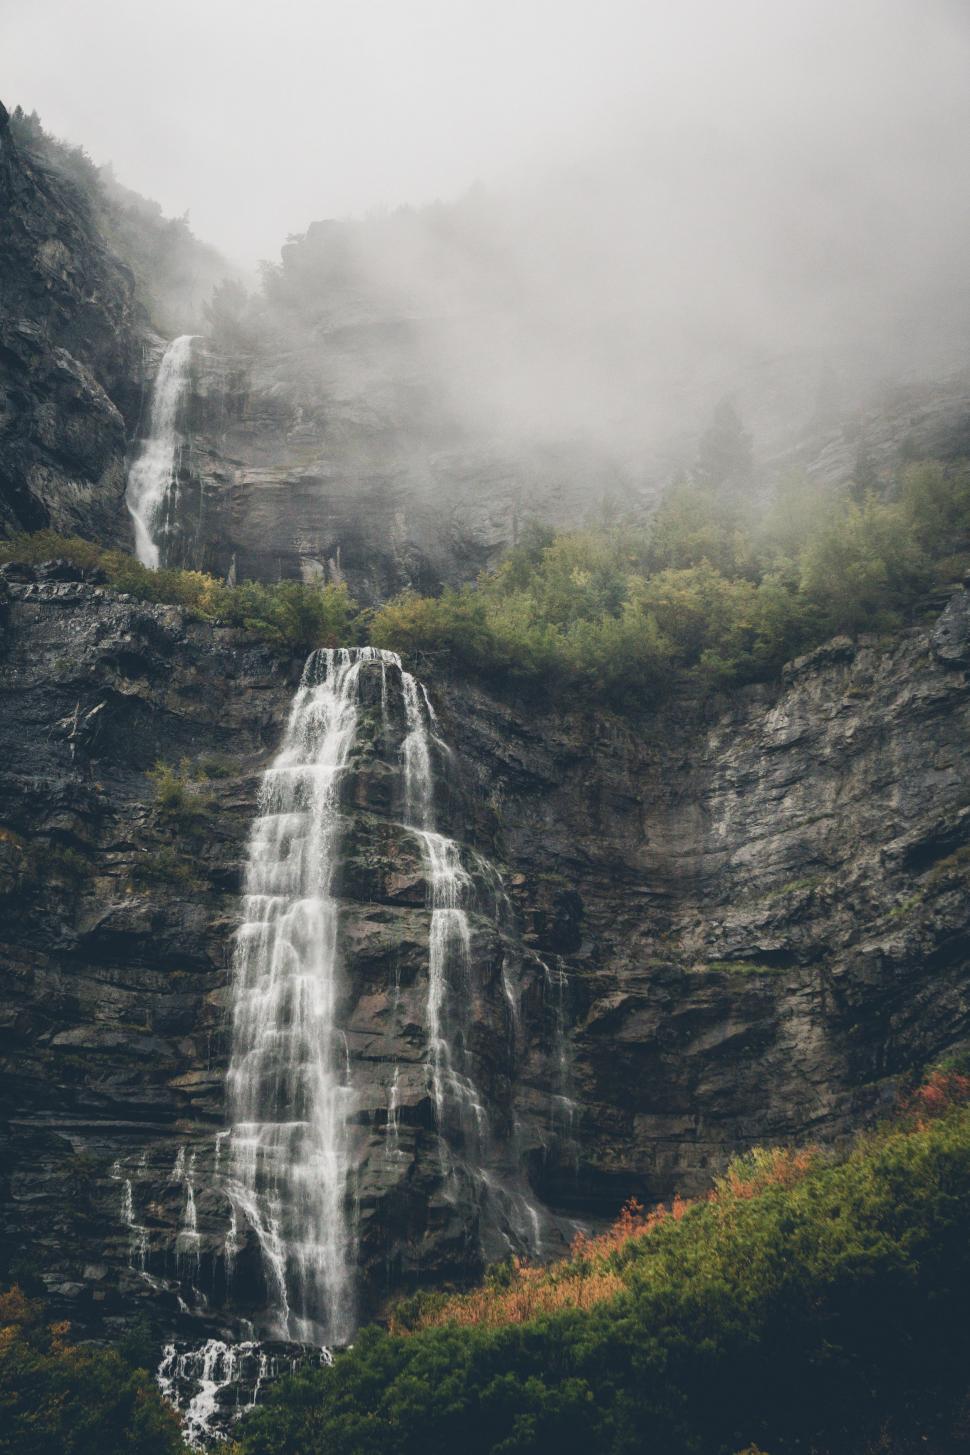 Free Image of Foggy Mountain Waterfall 